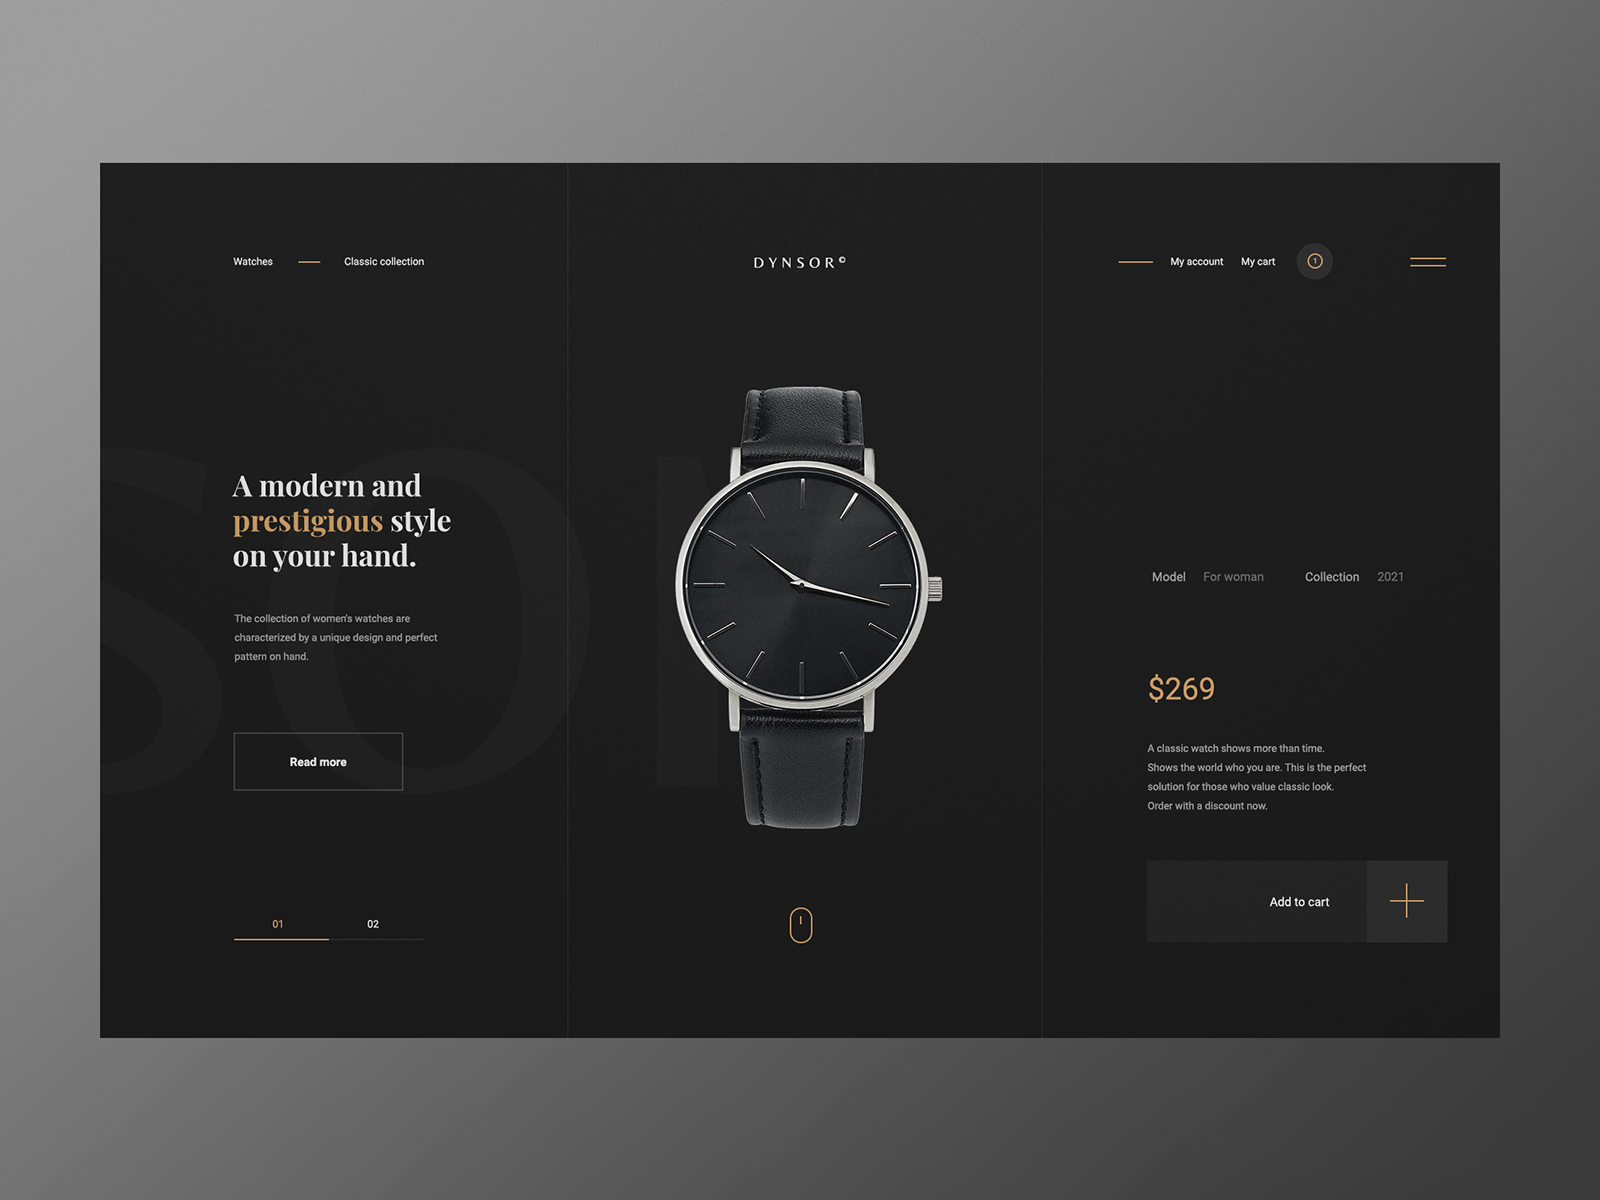 Shop Watches - Website concept by Tomasz Mazurczak on Dribbble